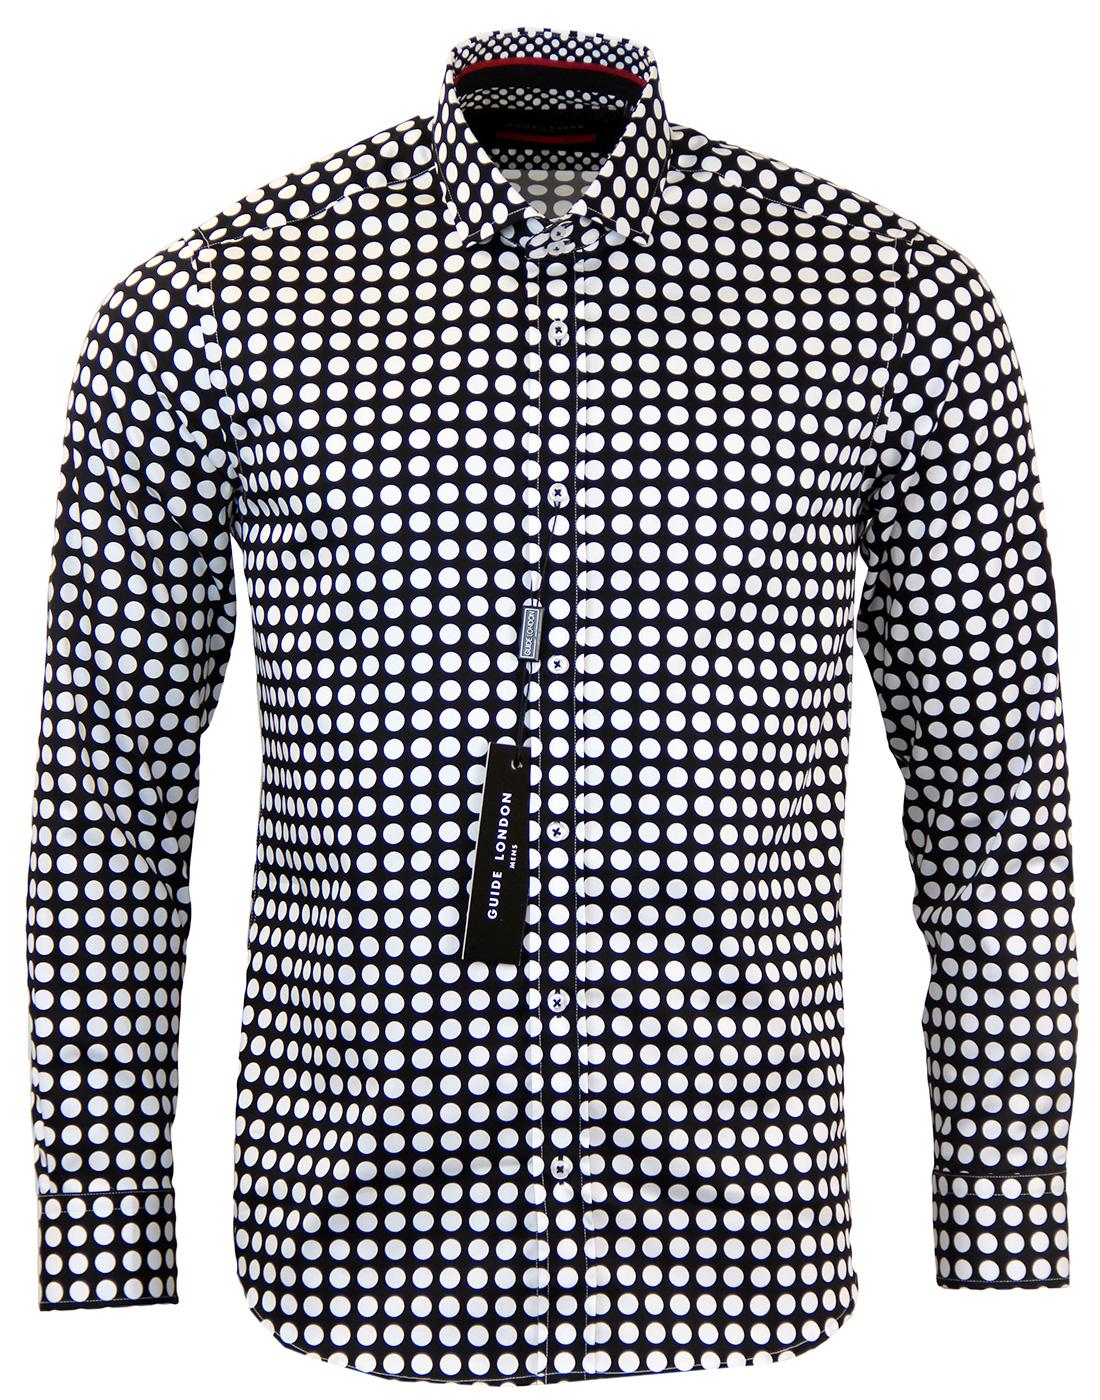 GUIDE LONDON 1960s Mod Uniform Polka Dot Shirt (B)